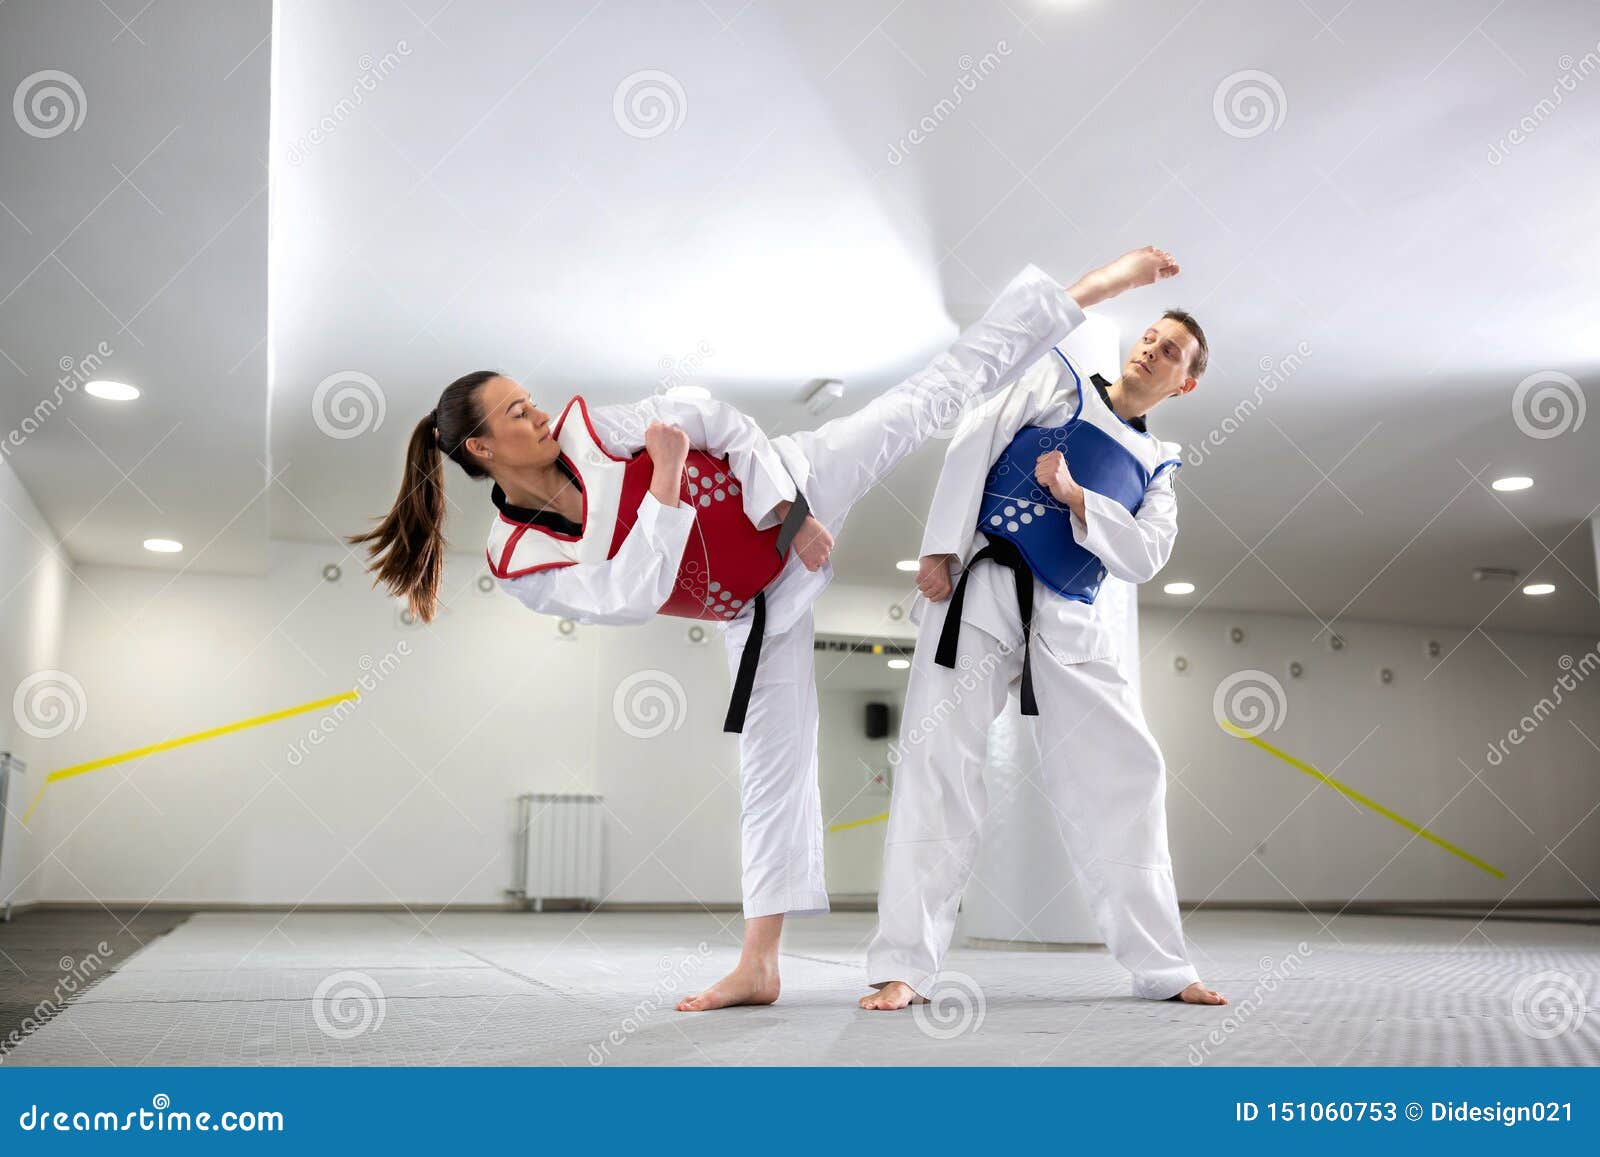 young woman training martial art of taekwondo with her coach